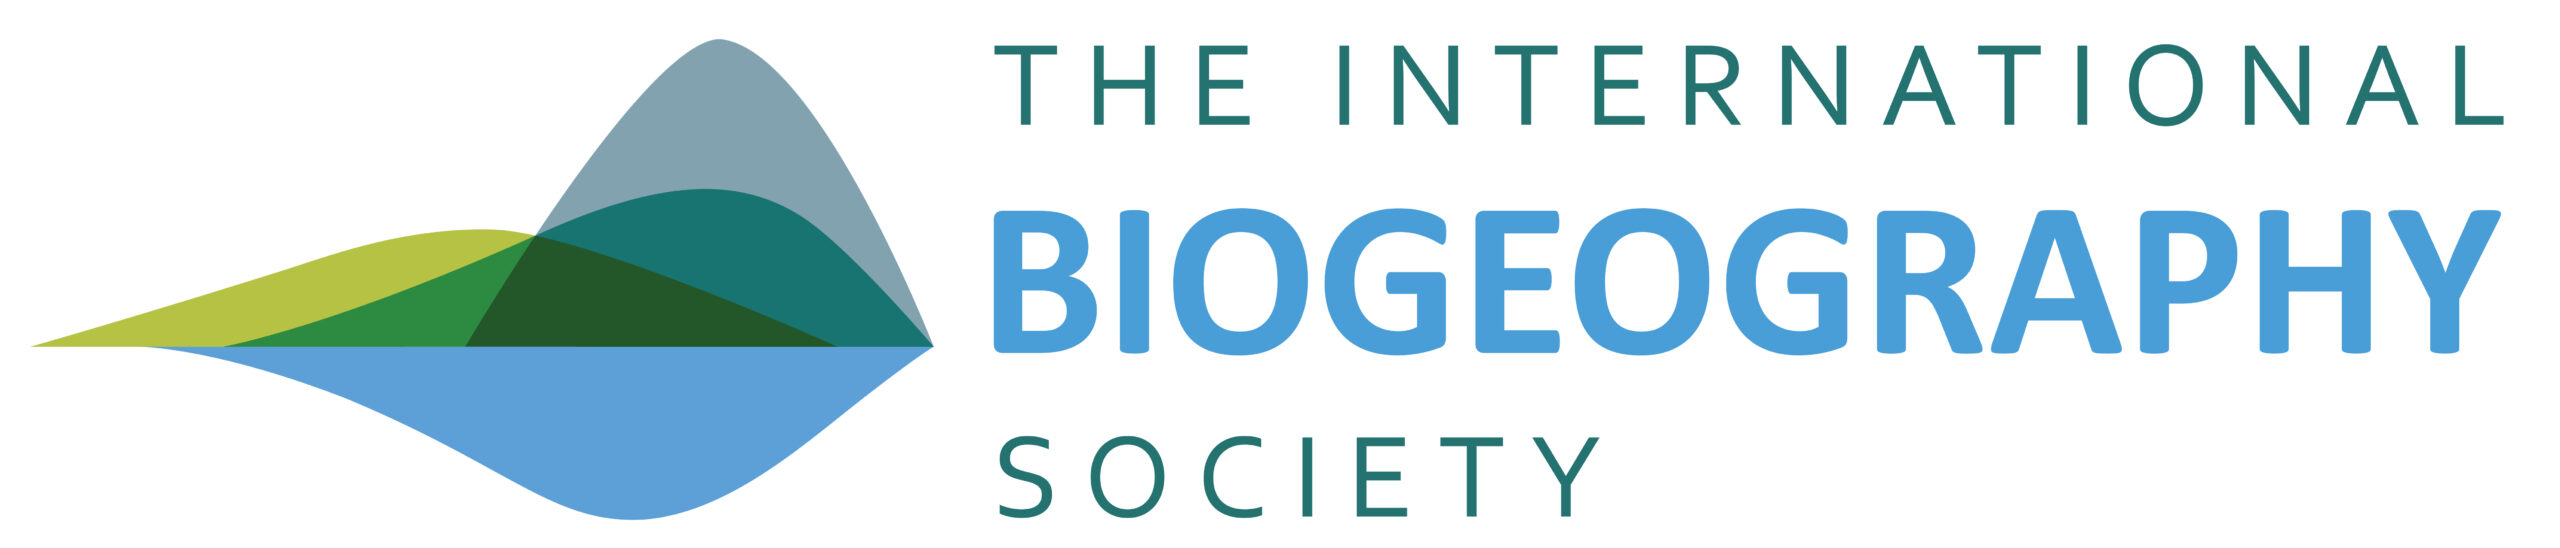 The International Biogeography Society Logo